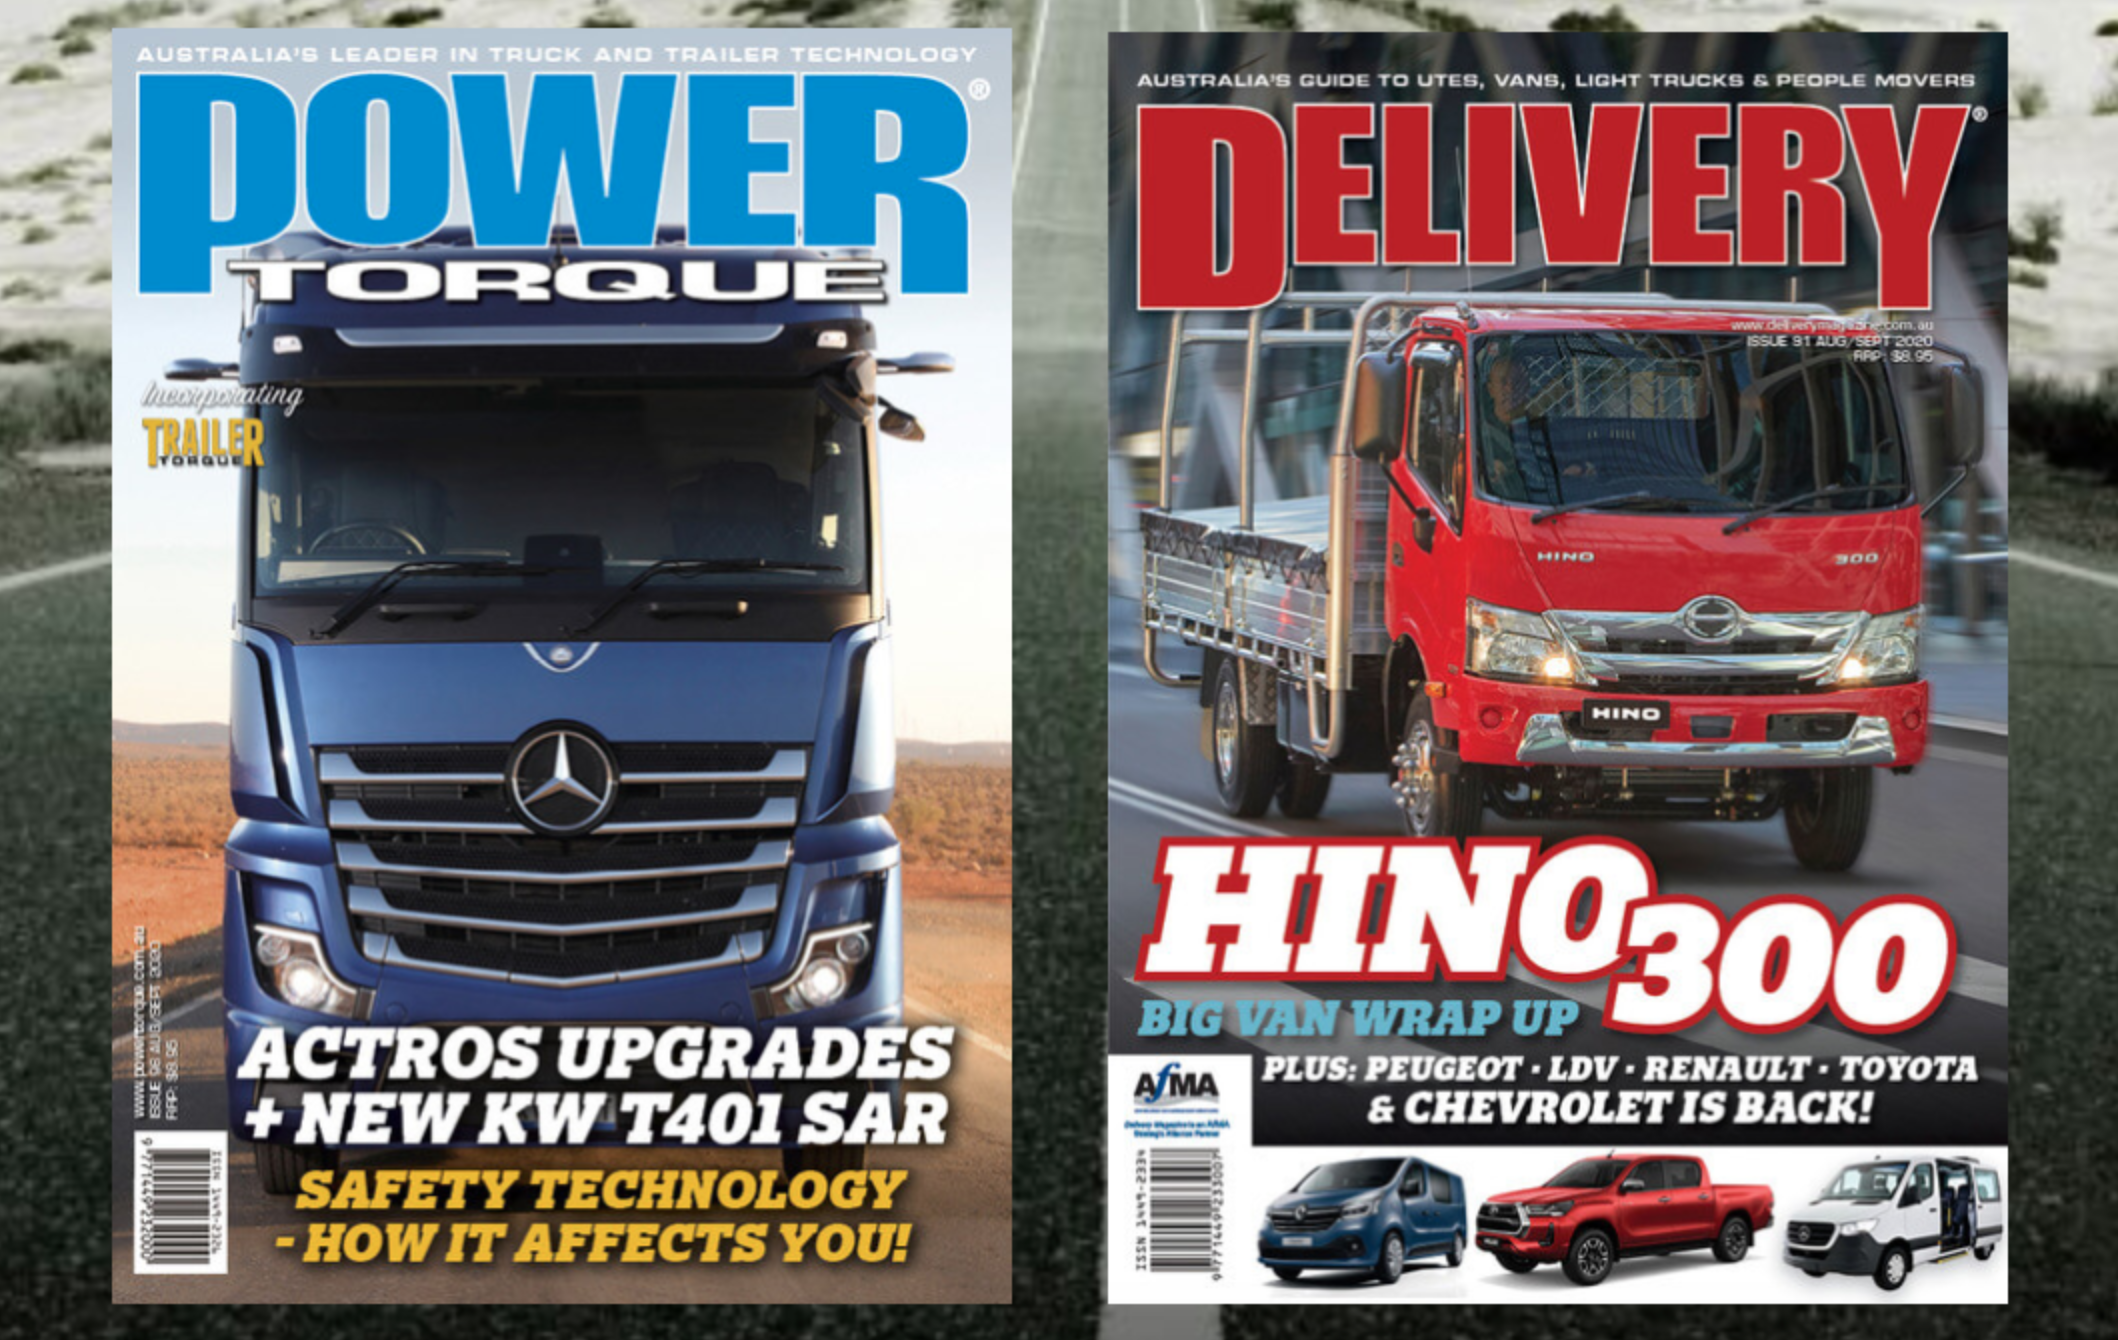 Powertorque and Delivery magazines